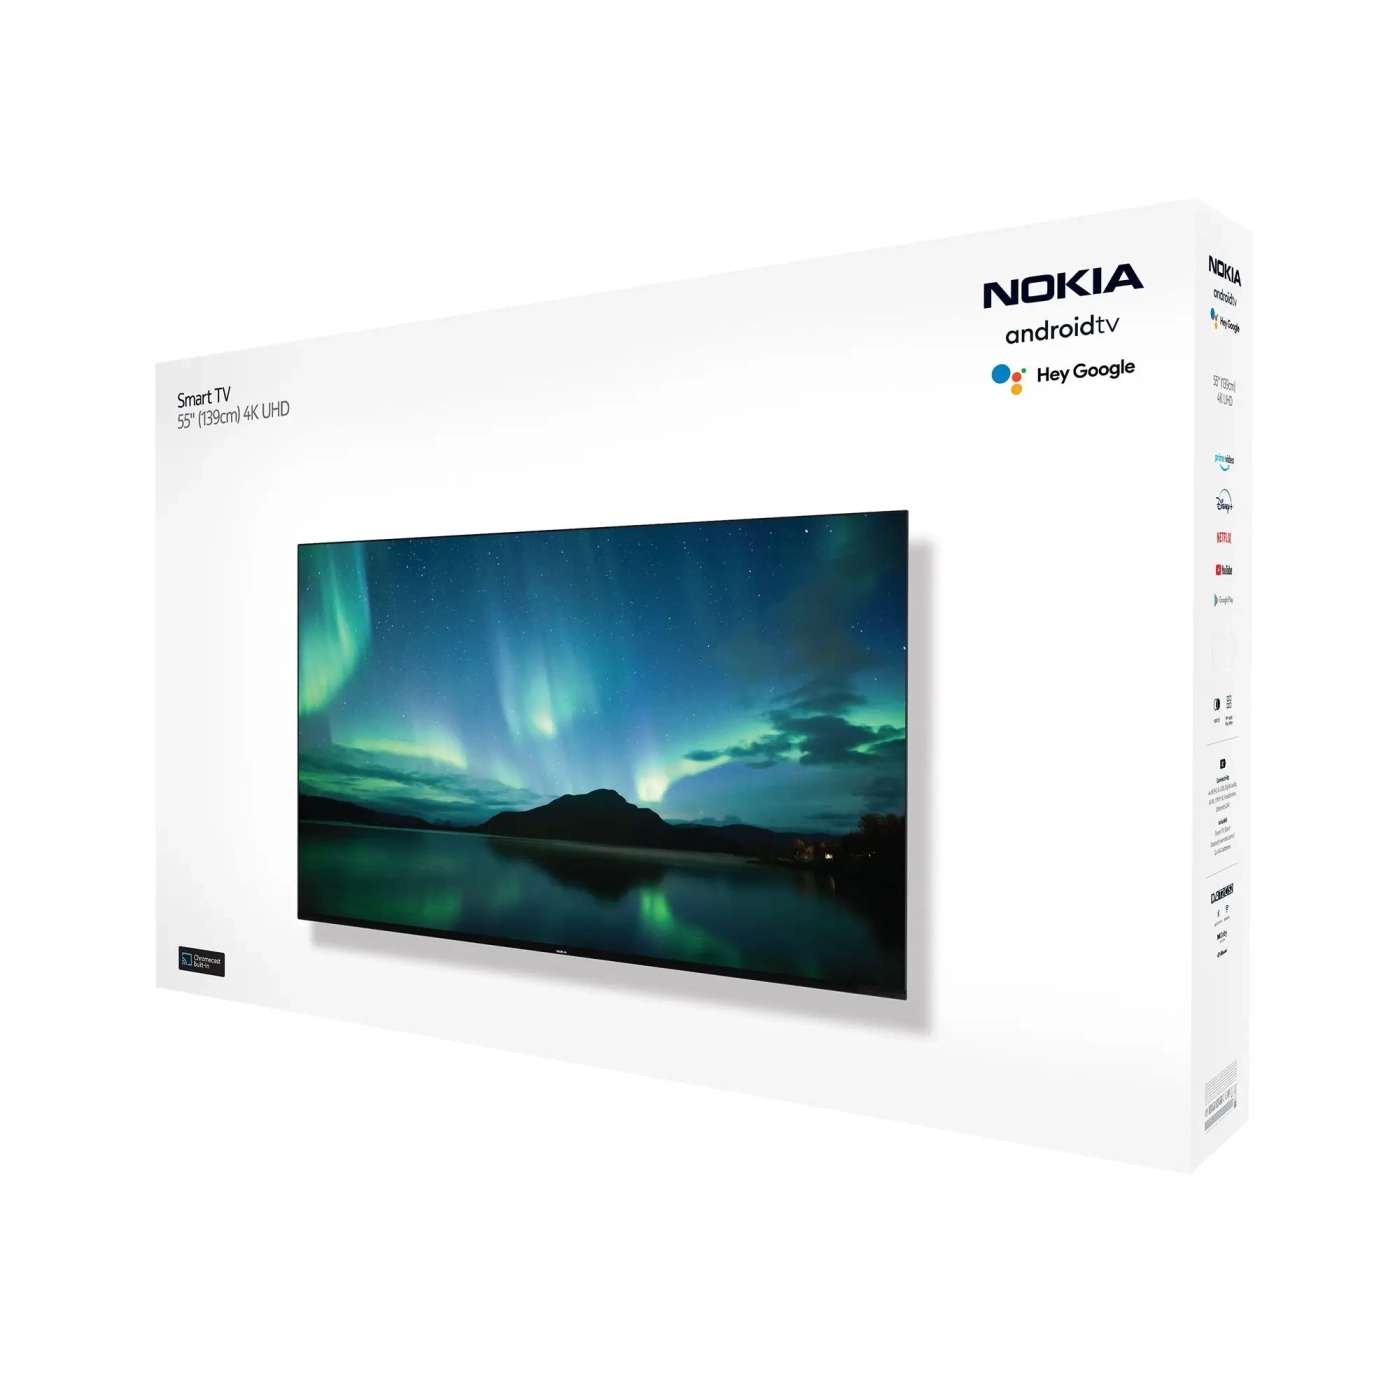 Купить Телевизор Nokia Smart TV 5500A (UN55GV310I) - фото 6